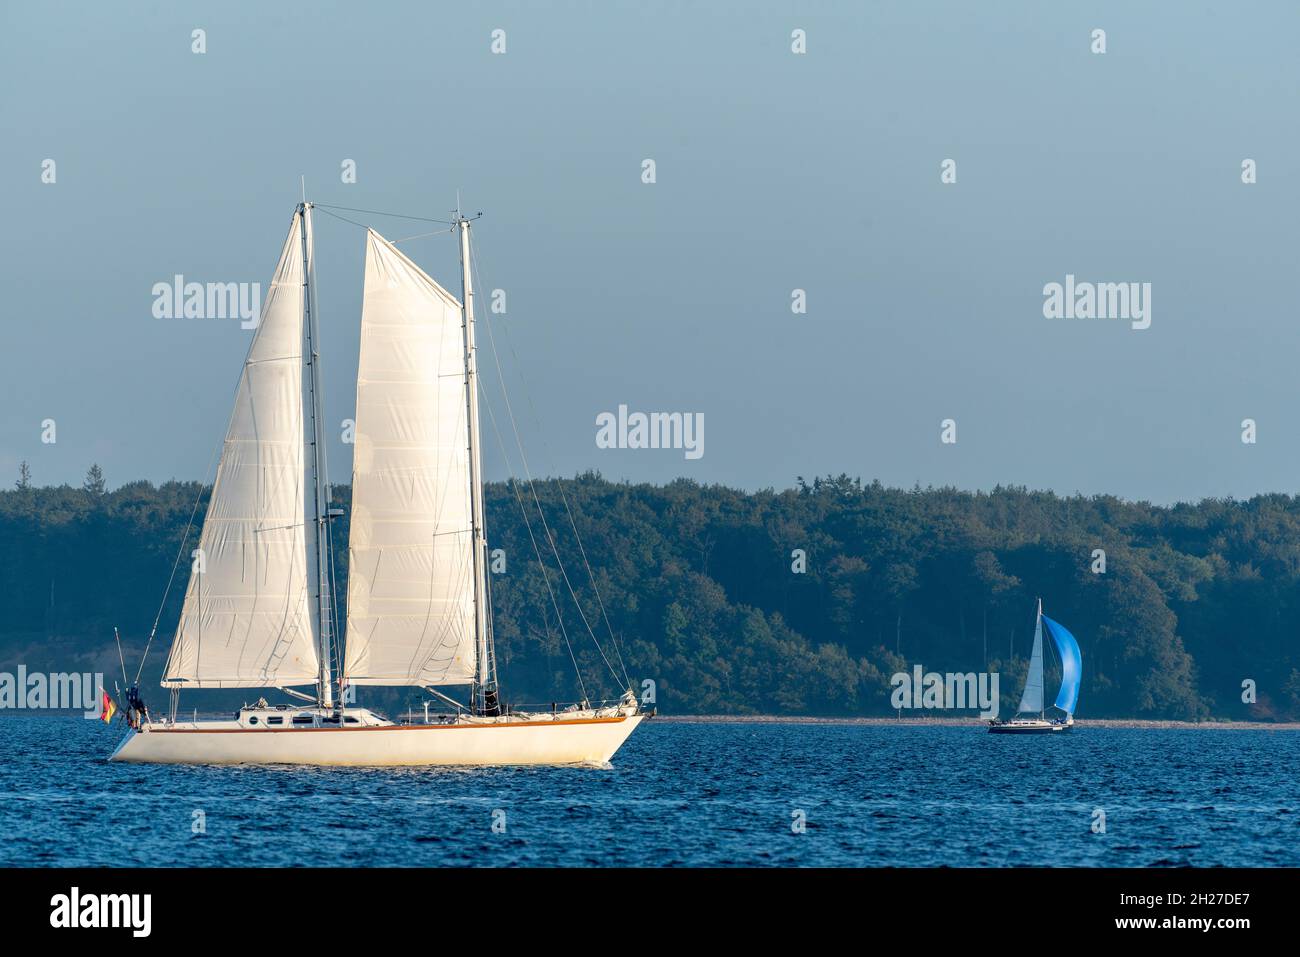 Sailboats on the Baltic Sea near Eckernförde, Germany Stock Photo